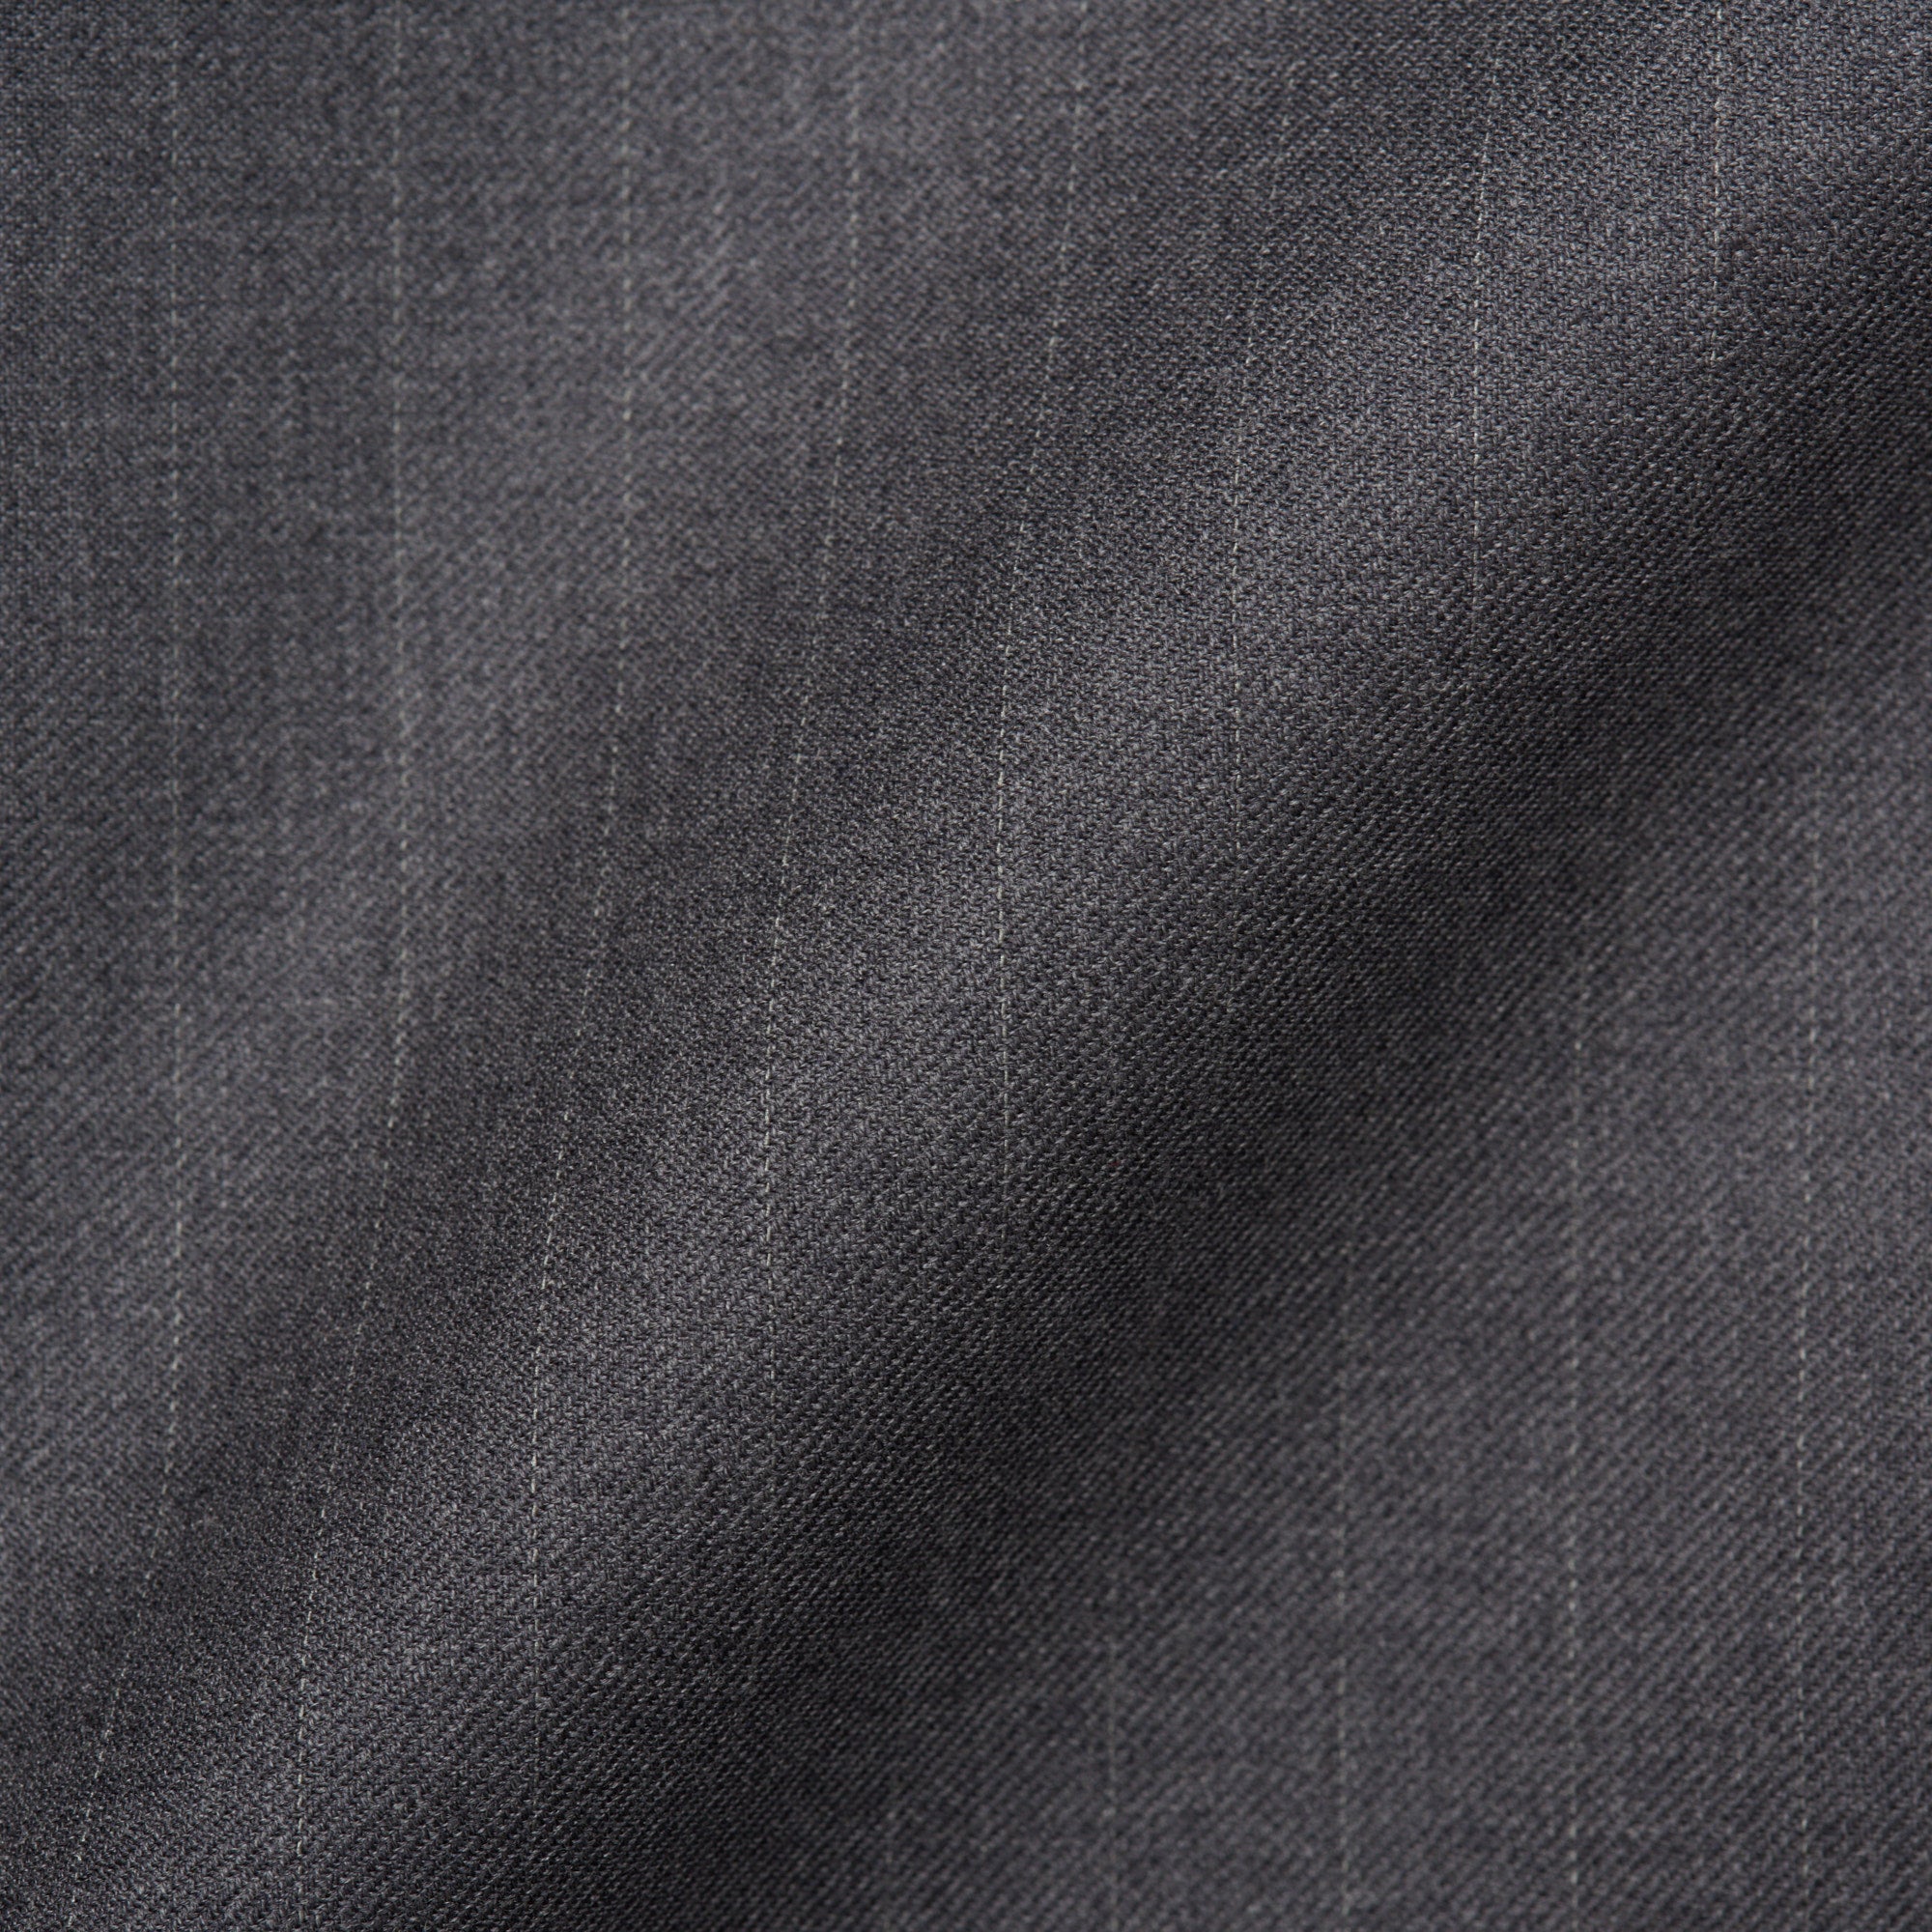 CESARE ATTOLINI Napoli Handmade Gray Striped Wool Business Suit EU 54 NEW US 44 CESARE ATTOLINI